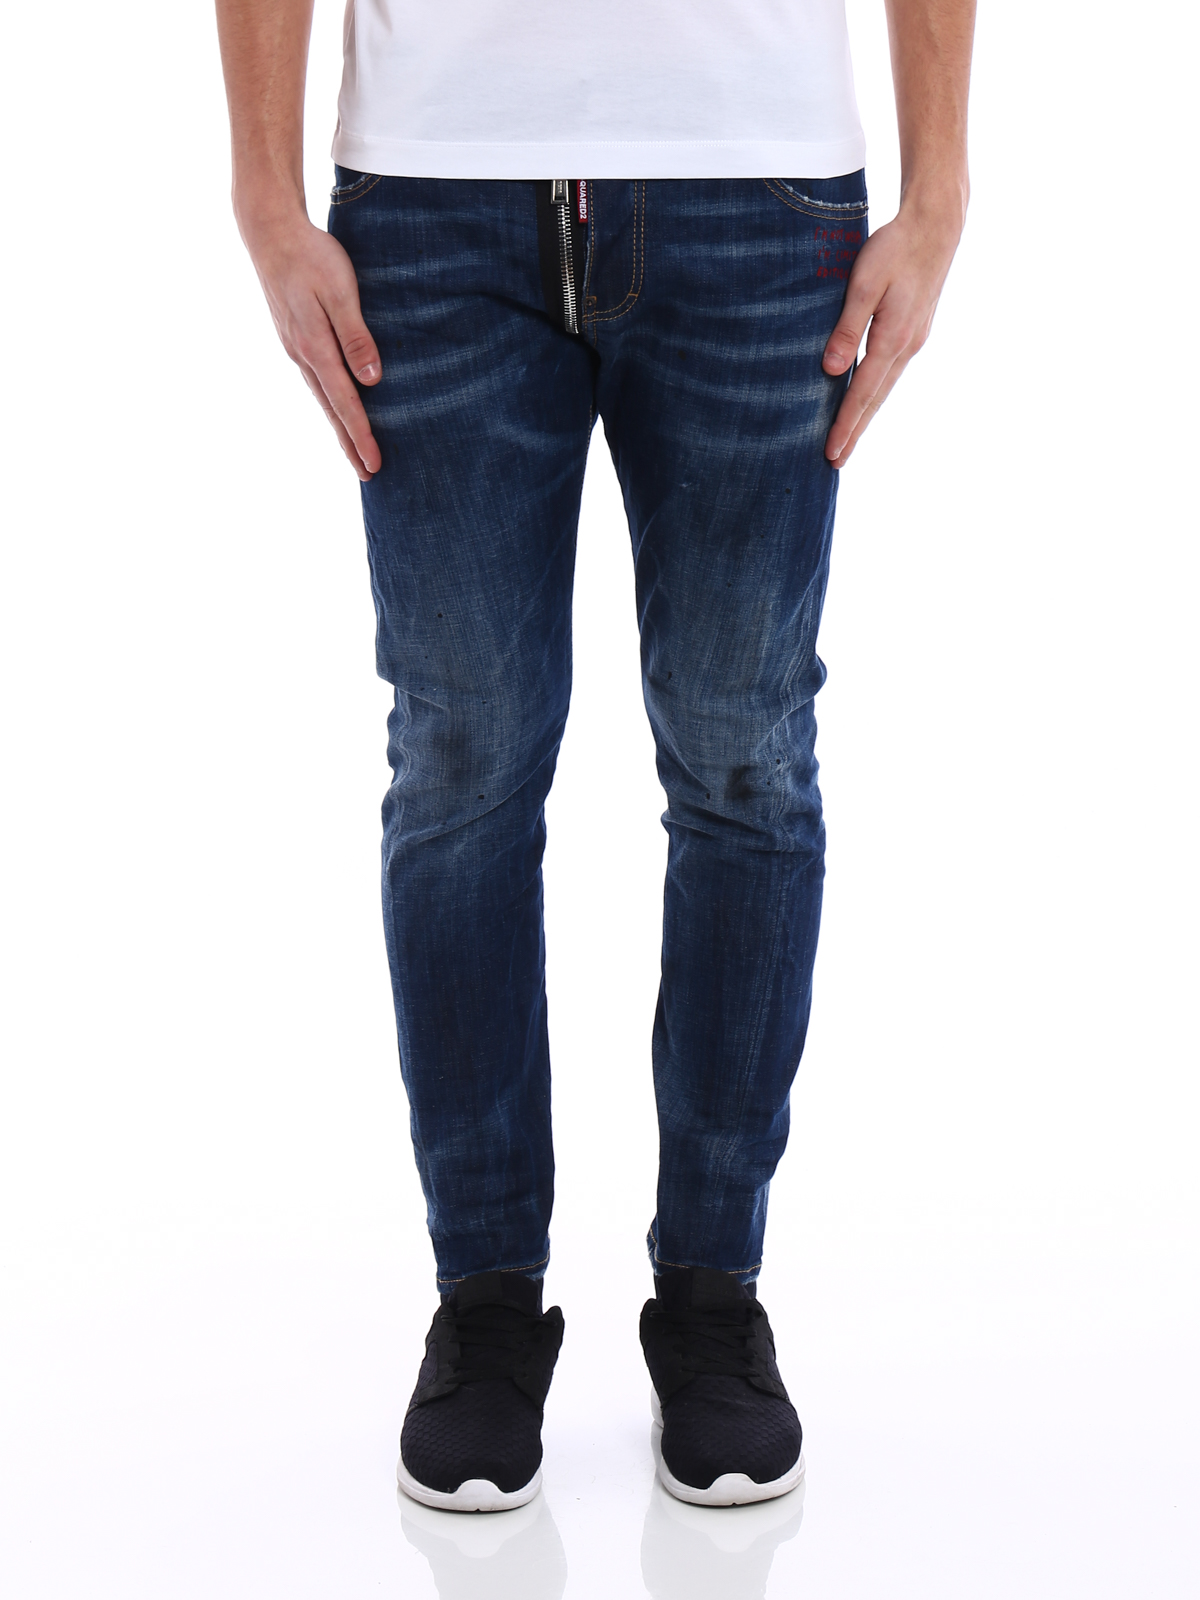 M.B. jeans - straight leg jeans 